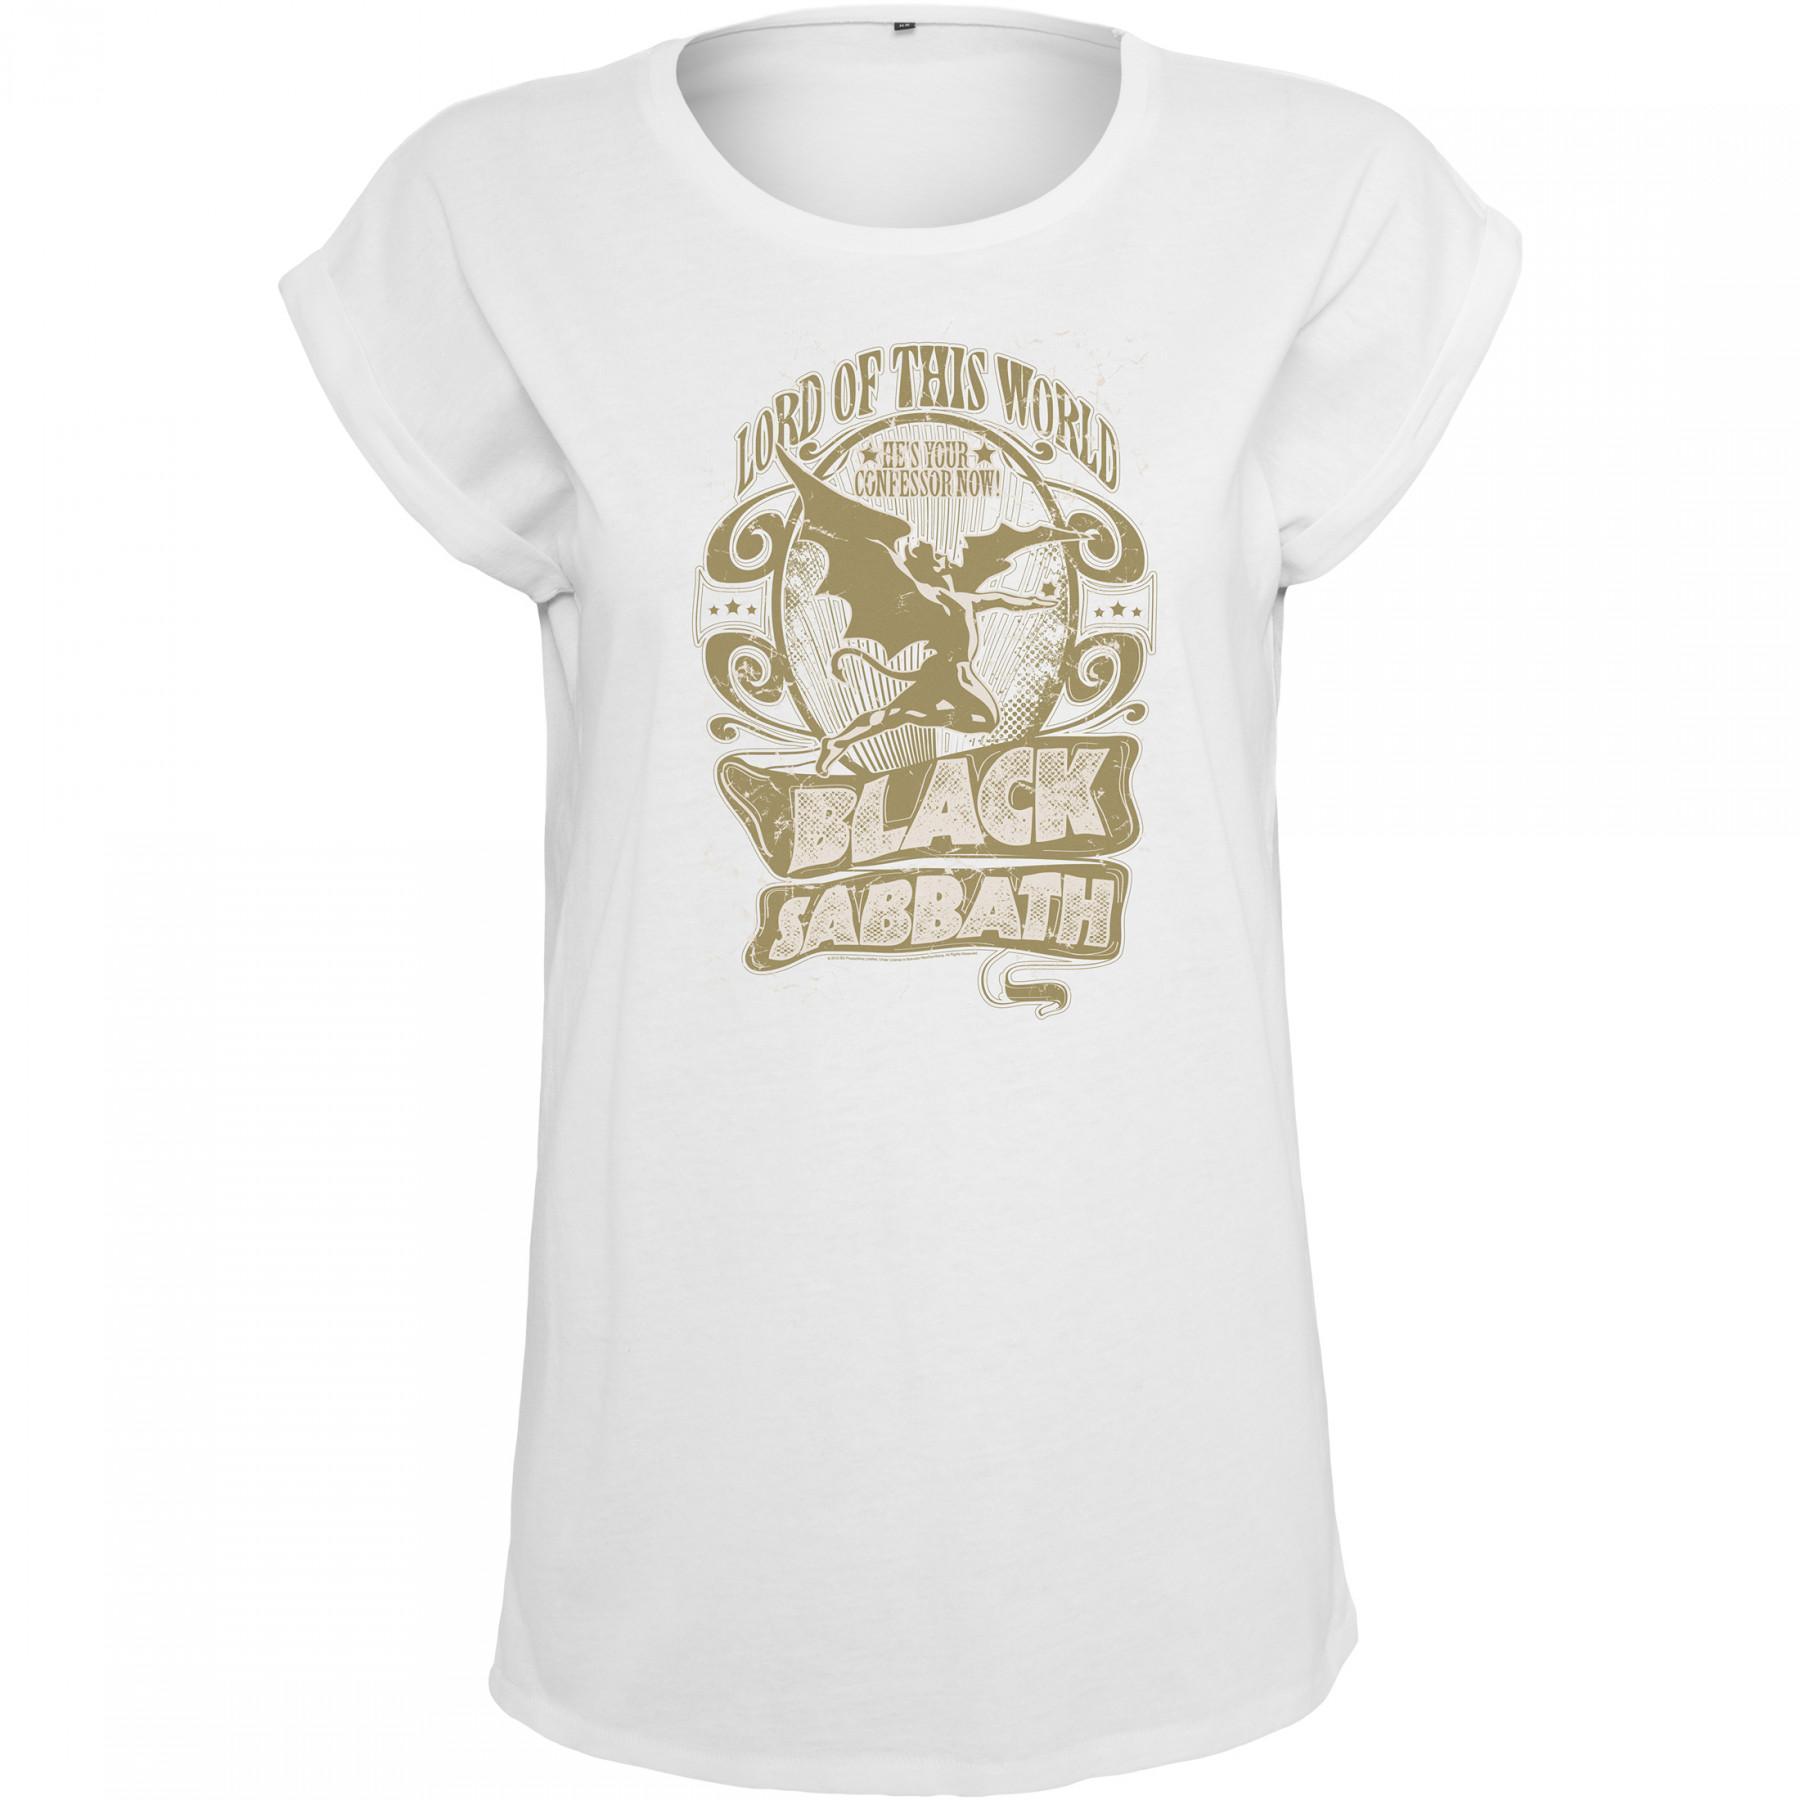 T-shirt woman Urban Classic bla bla abbath lotw white